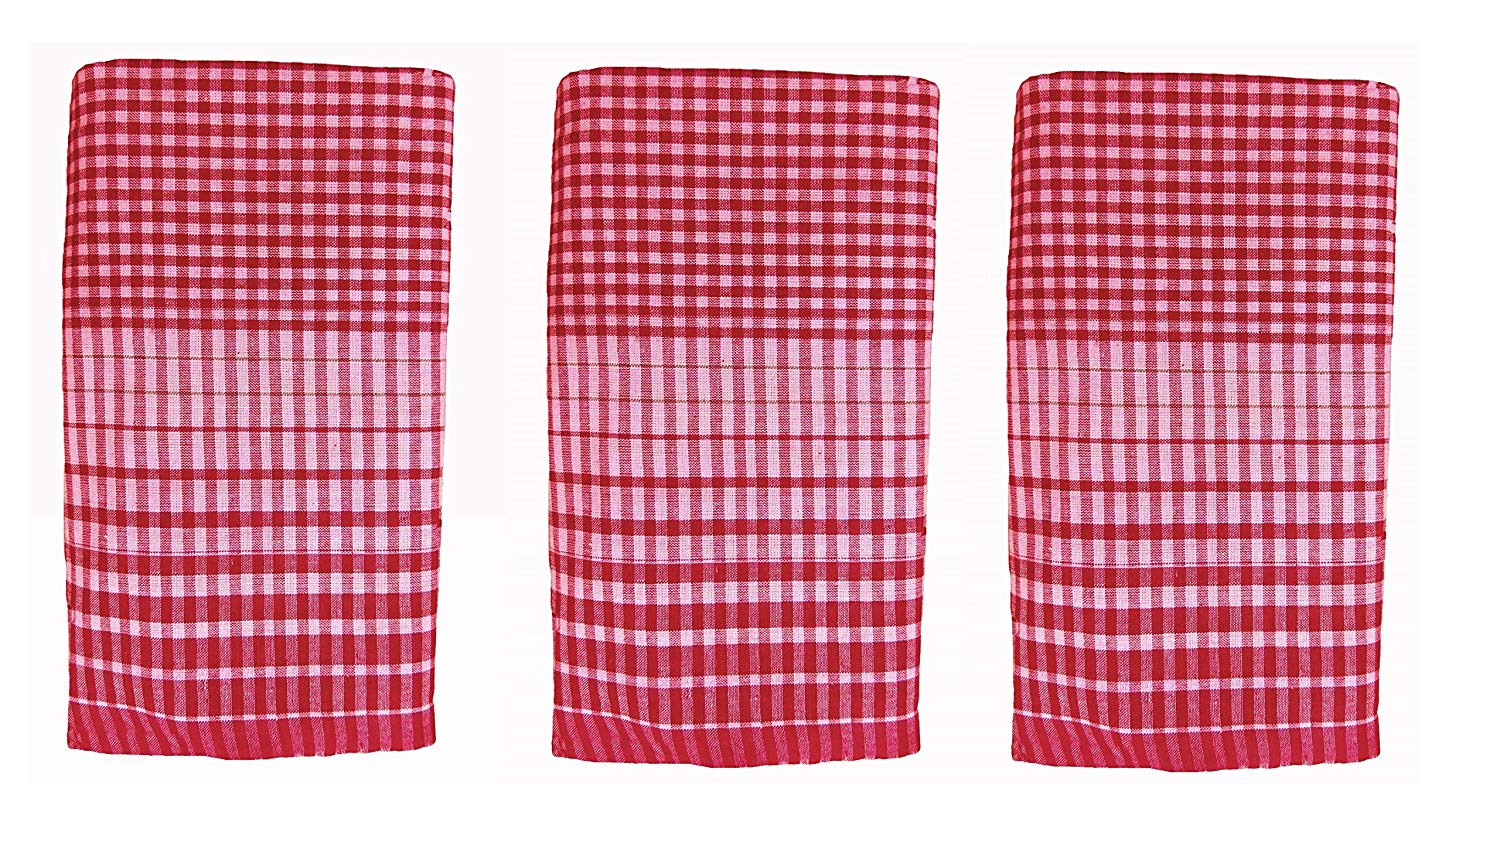 Bhagalpuri-Cotton-Bath-Towel-Handloom-Large-Gamcha-Towels-Red-Pack-Of-3-B078NBKHQM.jpg